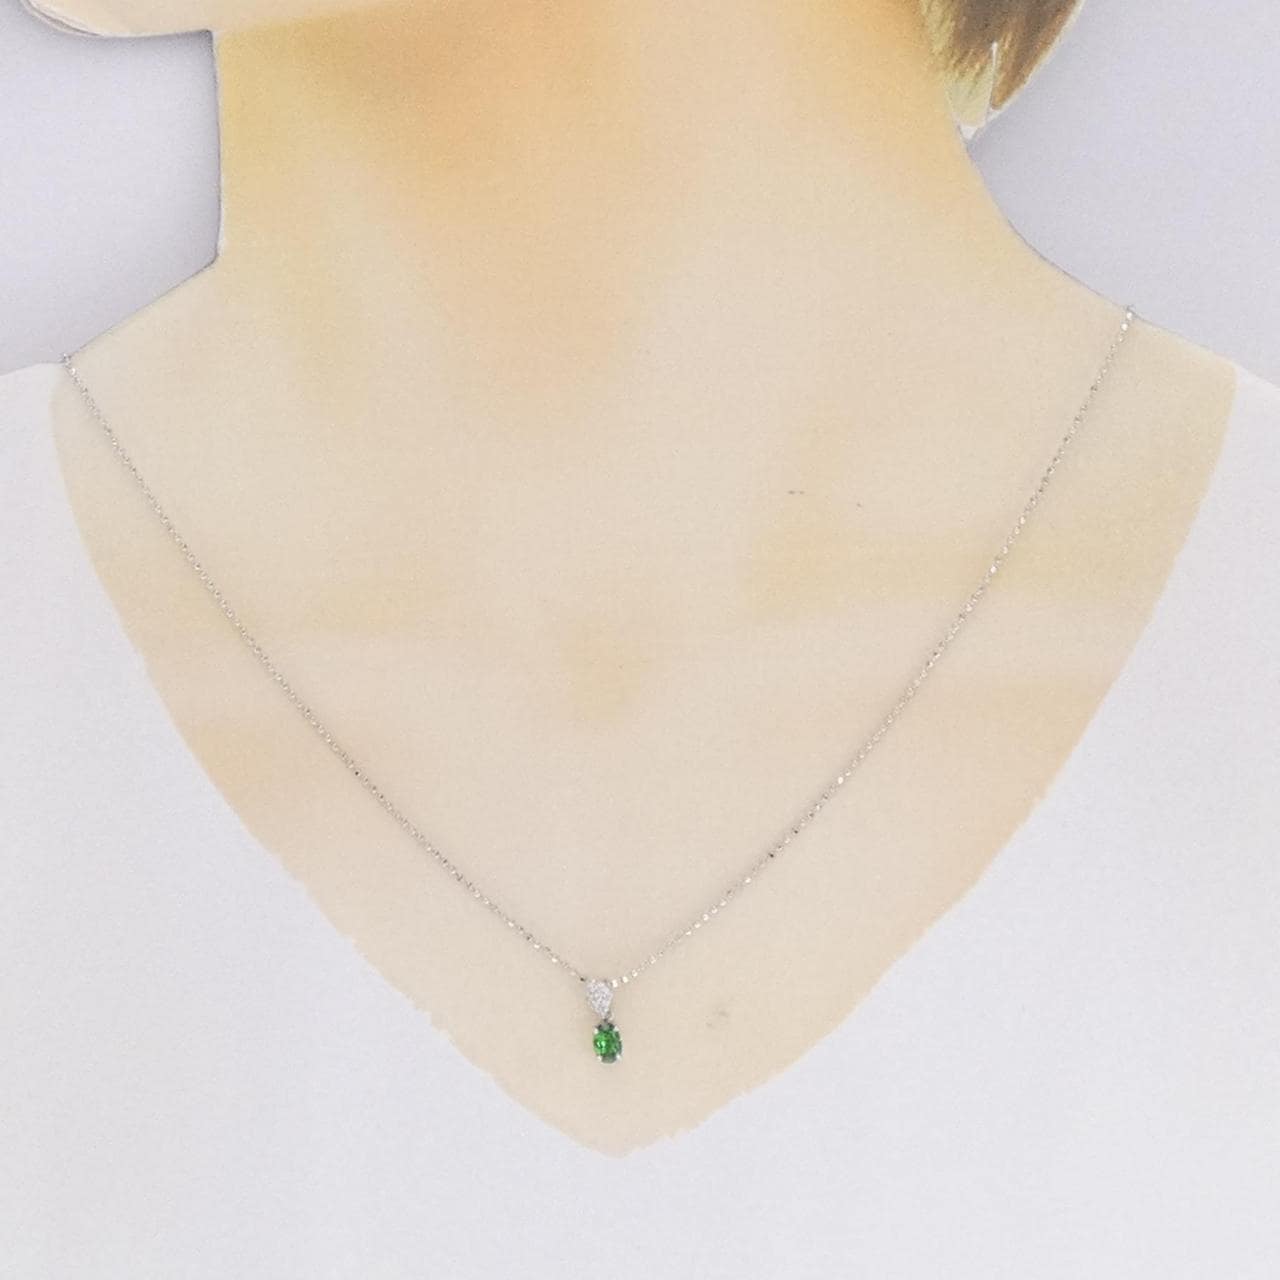 K18WG Garnet necklace 0.401CT